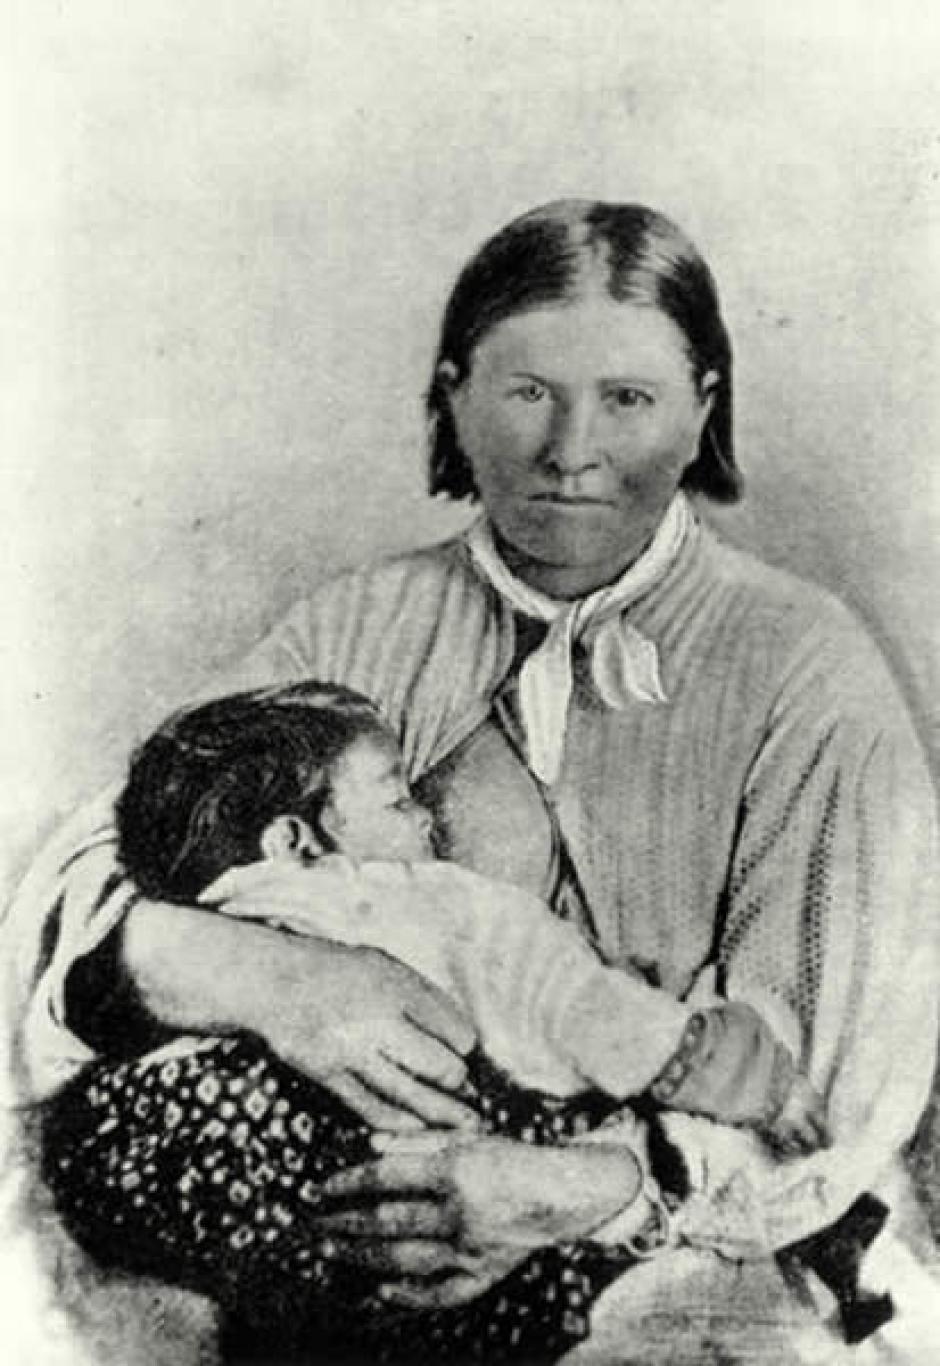 Cynthia Ann Parker, imagen tomada en 1860 o 1861